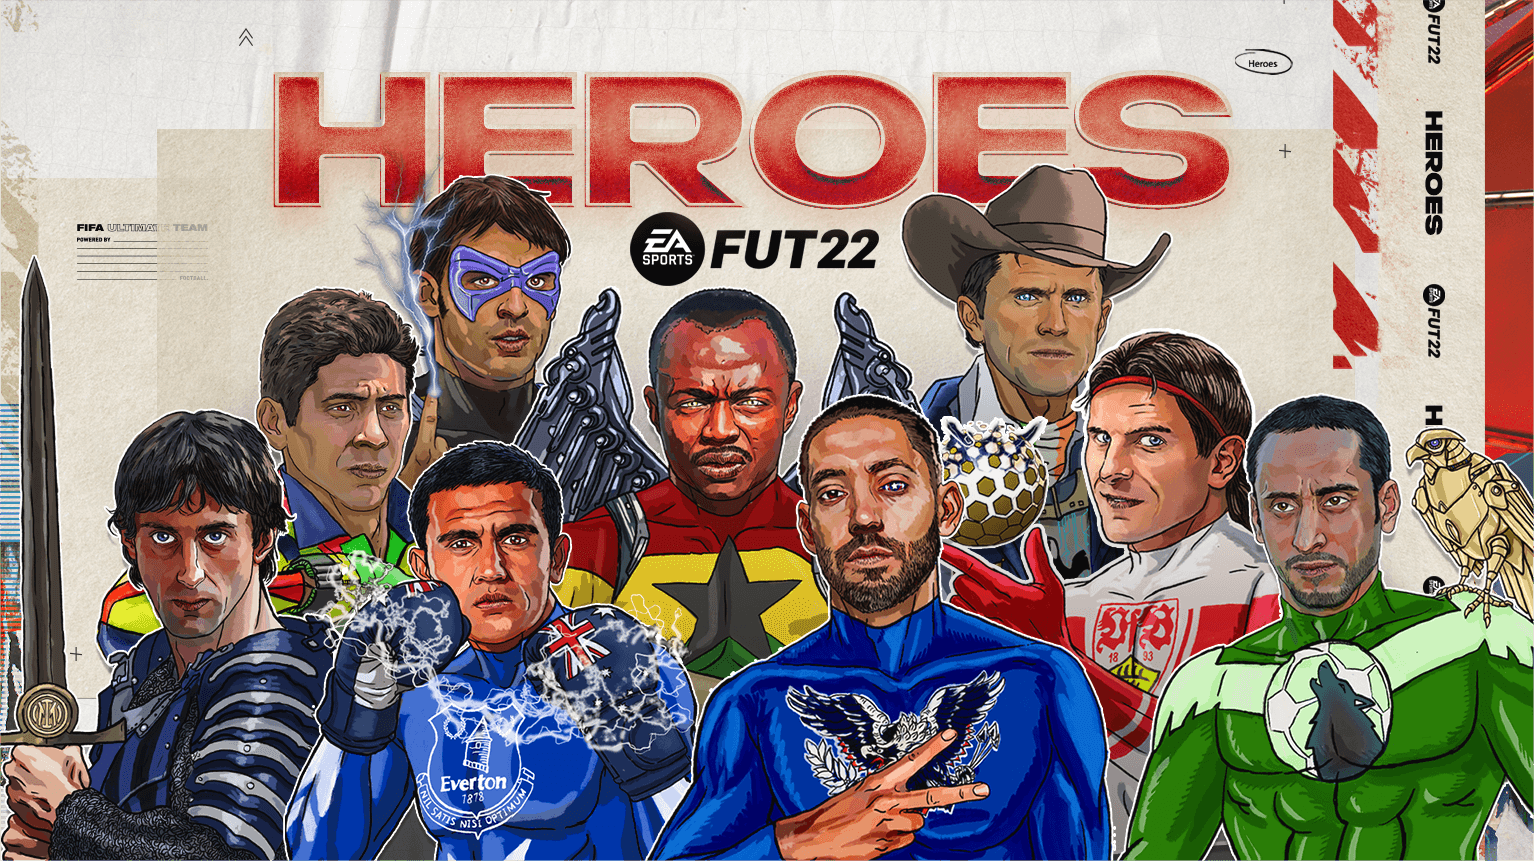 f22-fut-heroes-main-hero.png.adapt.crop1